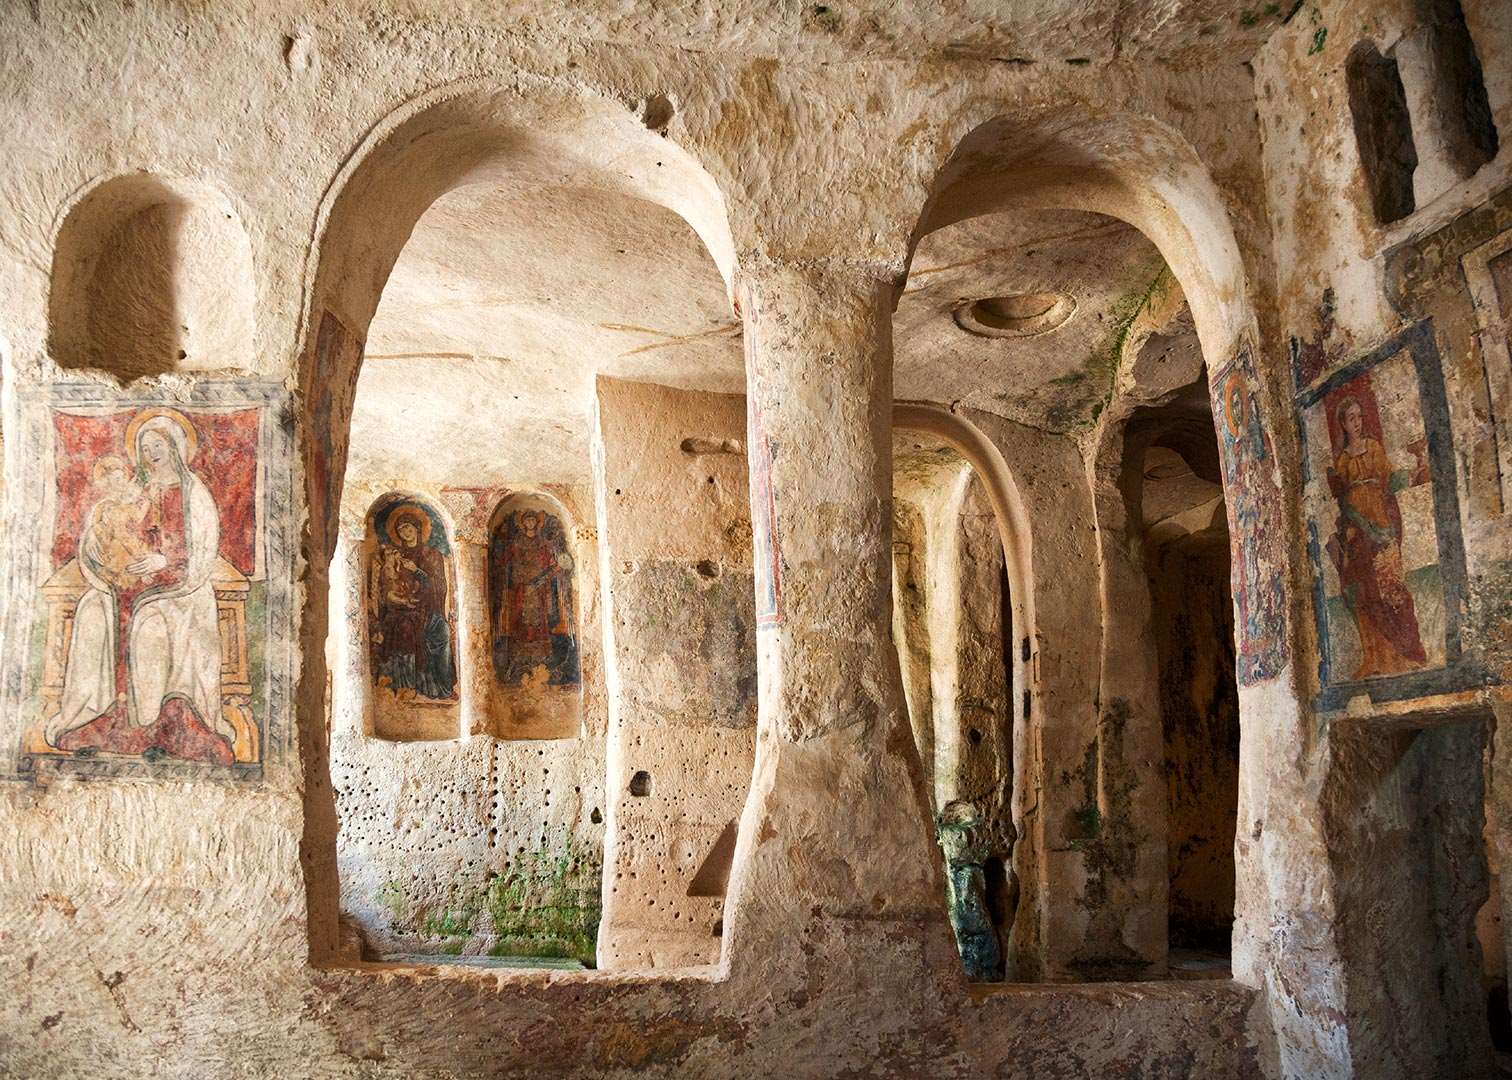  Iglesia cueva, Matera